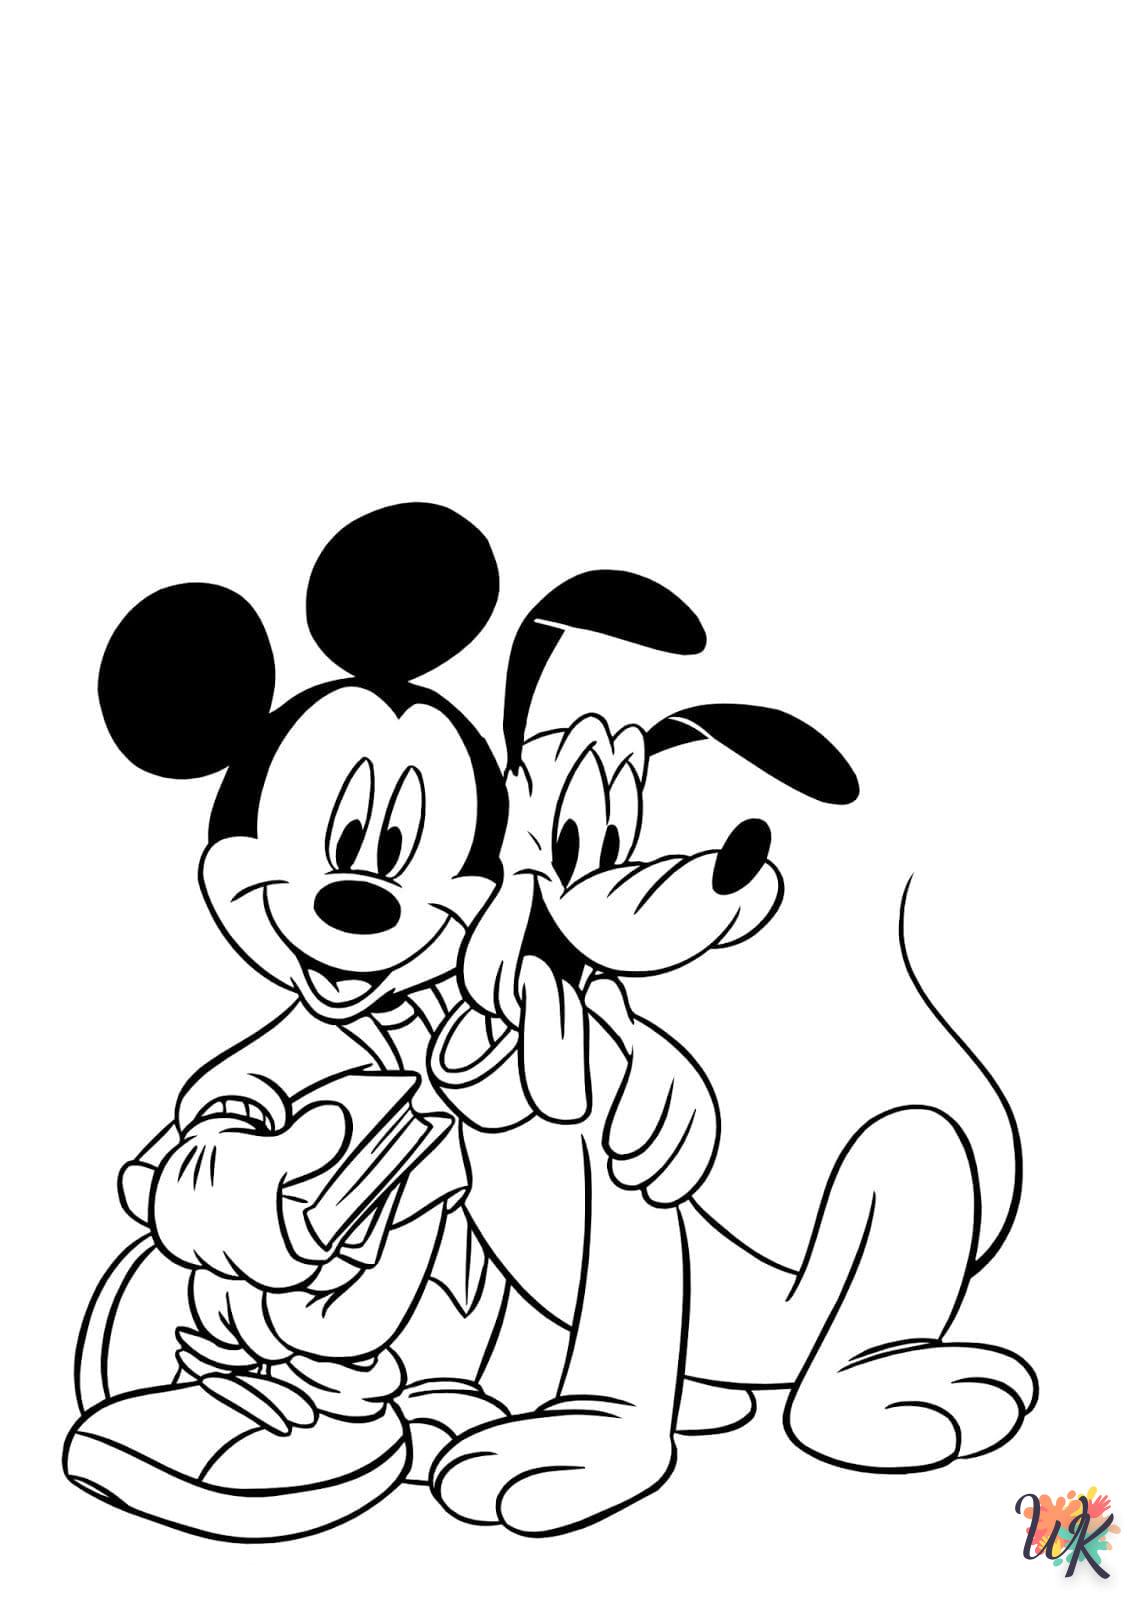 Kleurplaat Mickey Mouse7